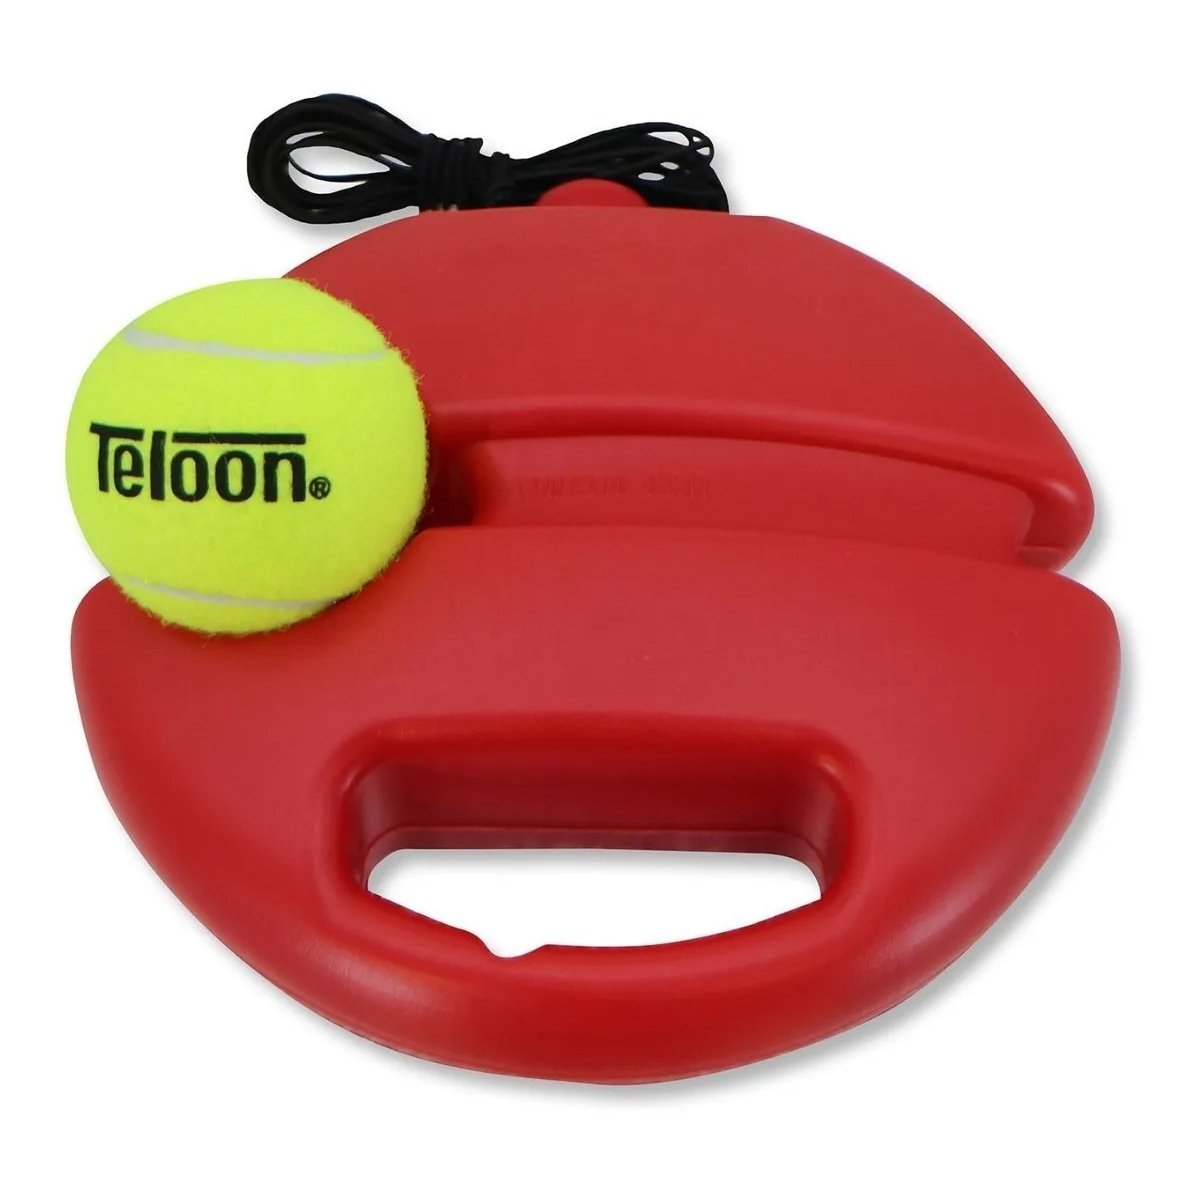 Bola De Tênis com Elástico Treinamento 4m Base Pvc- Teloon - 1